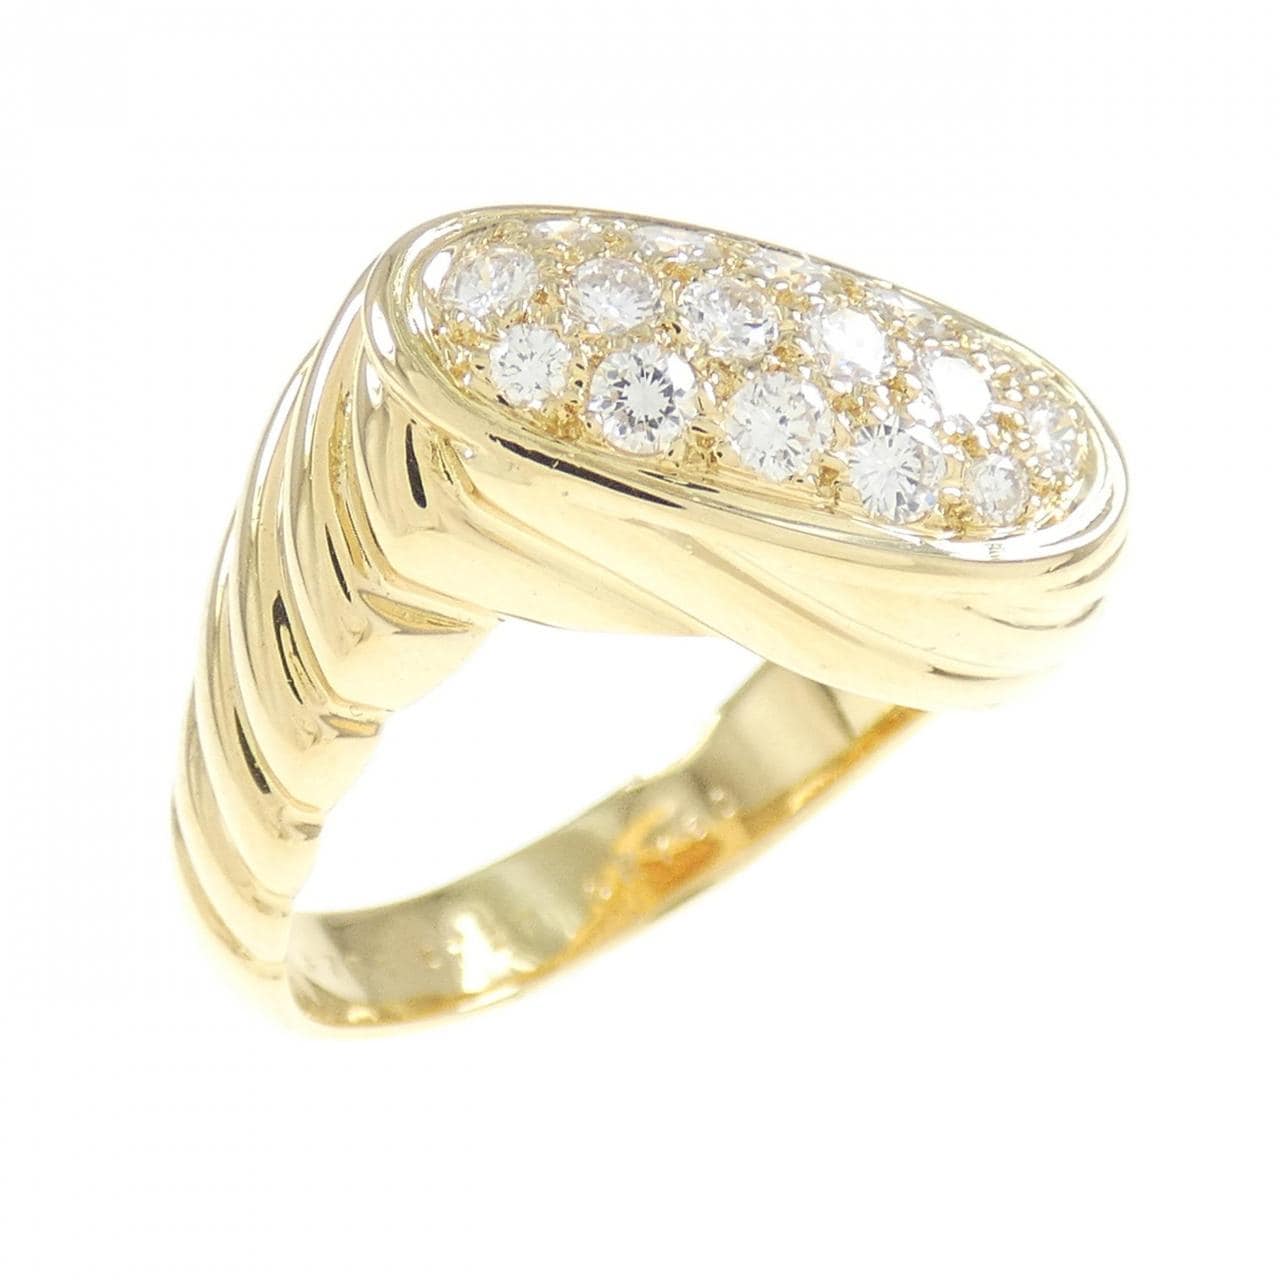 [vintage] Boucheron Diamond ring